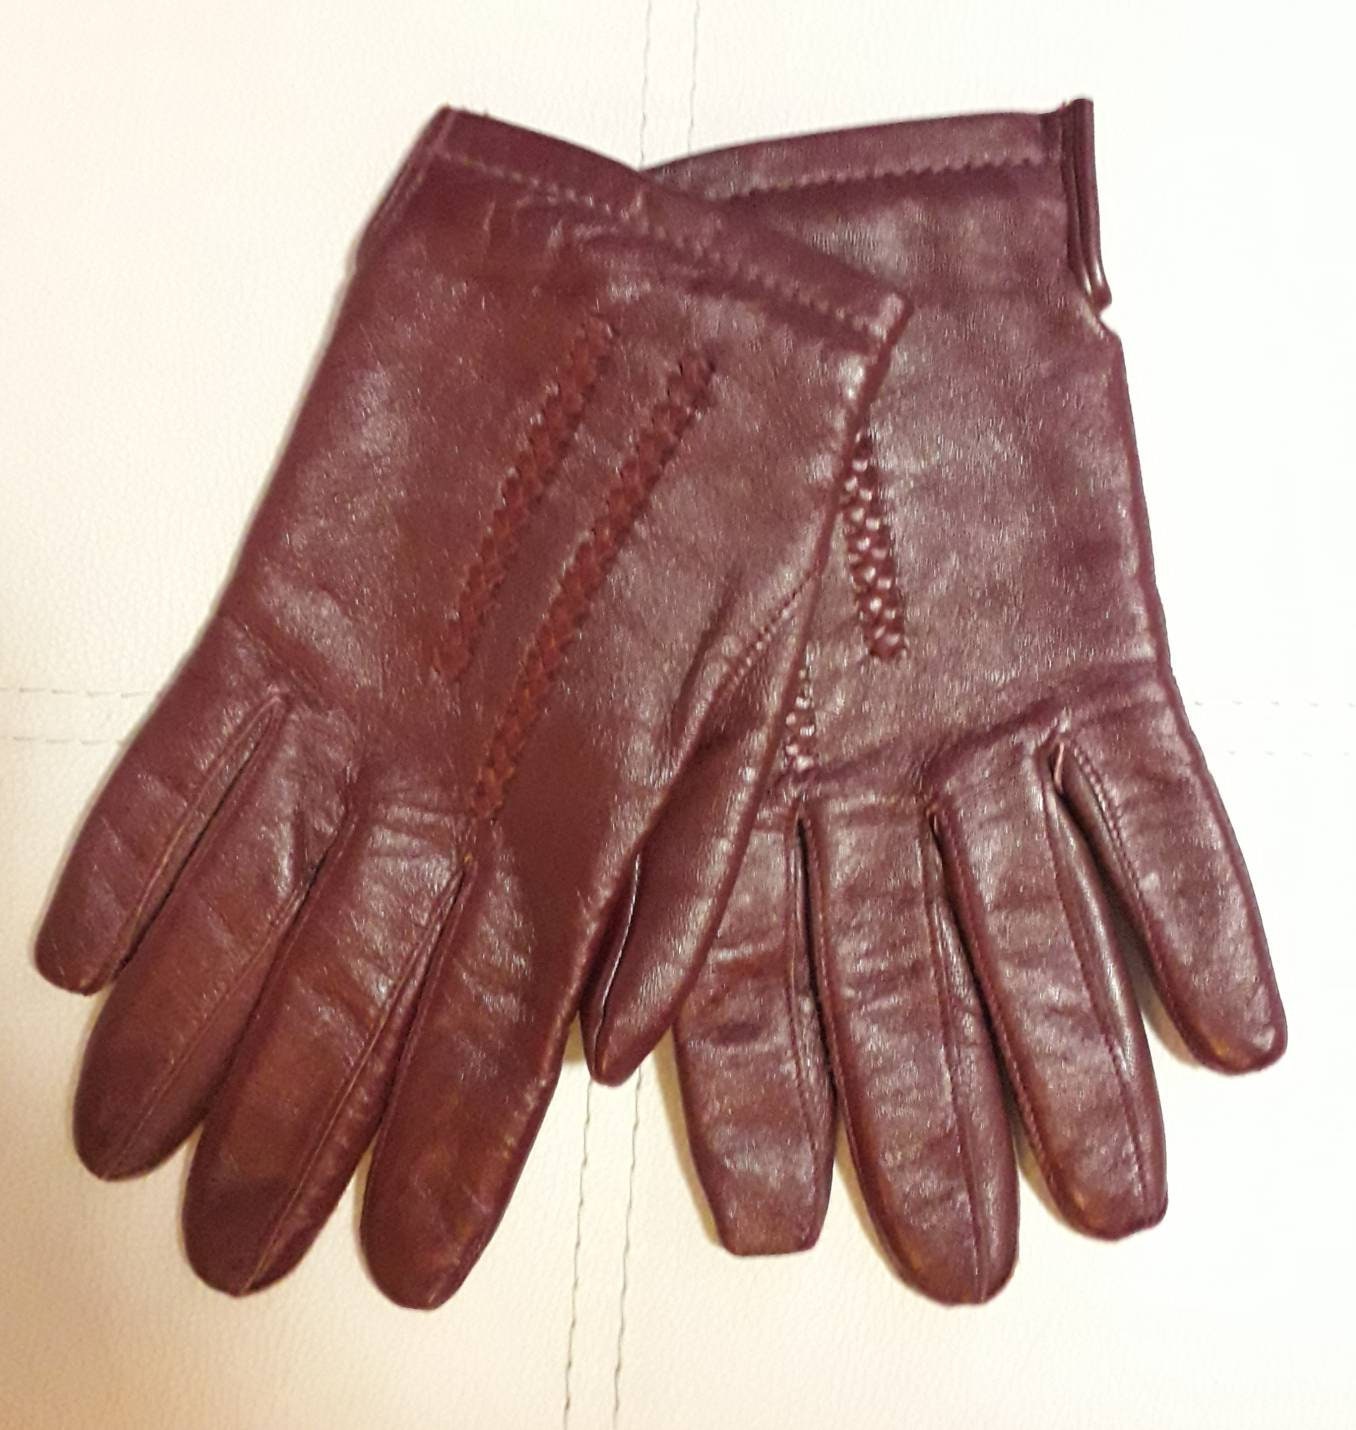 Vintage Leather Gloves 1980s Oxblood Maroon Leather Gloves Lined German ...